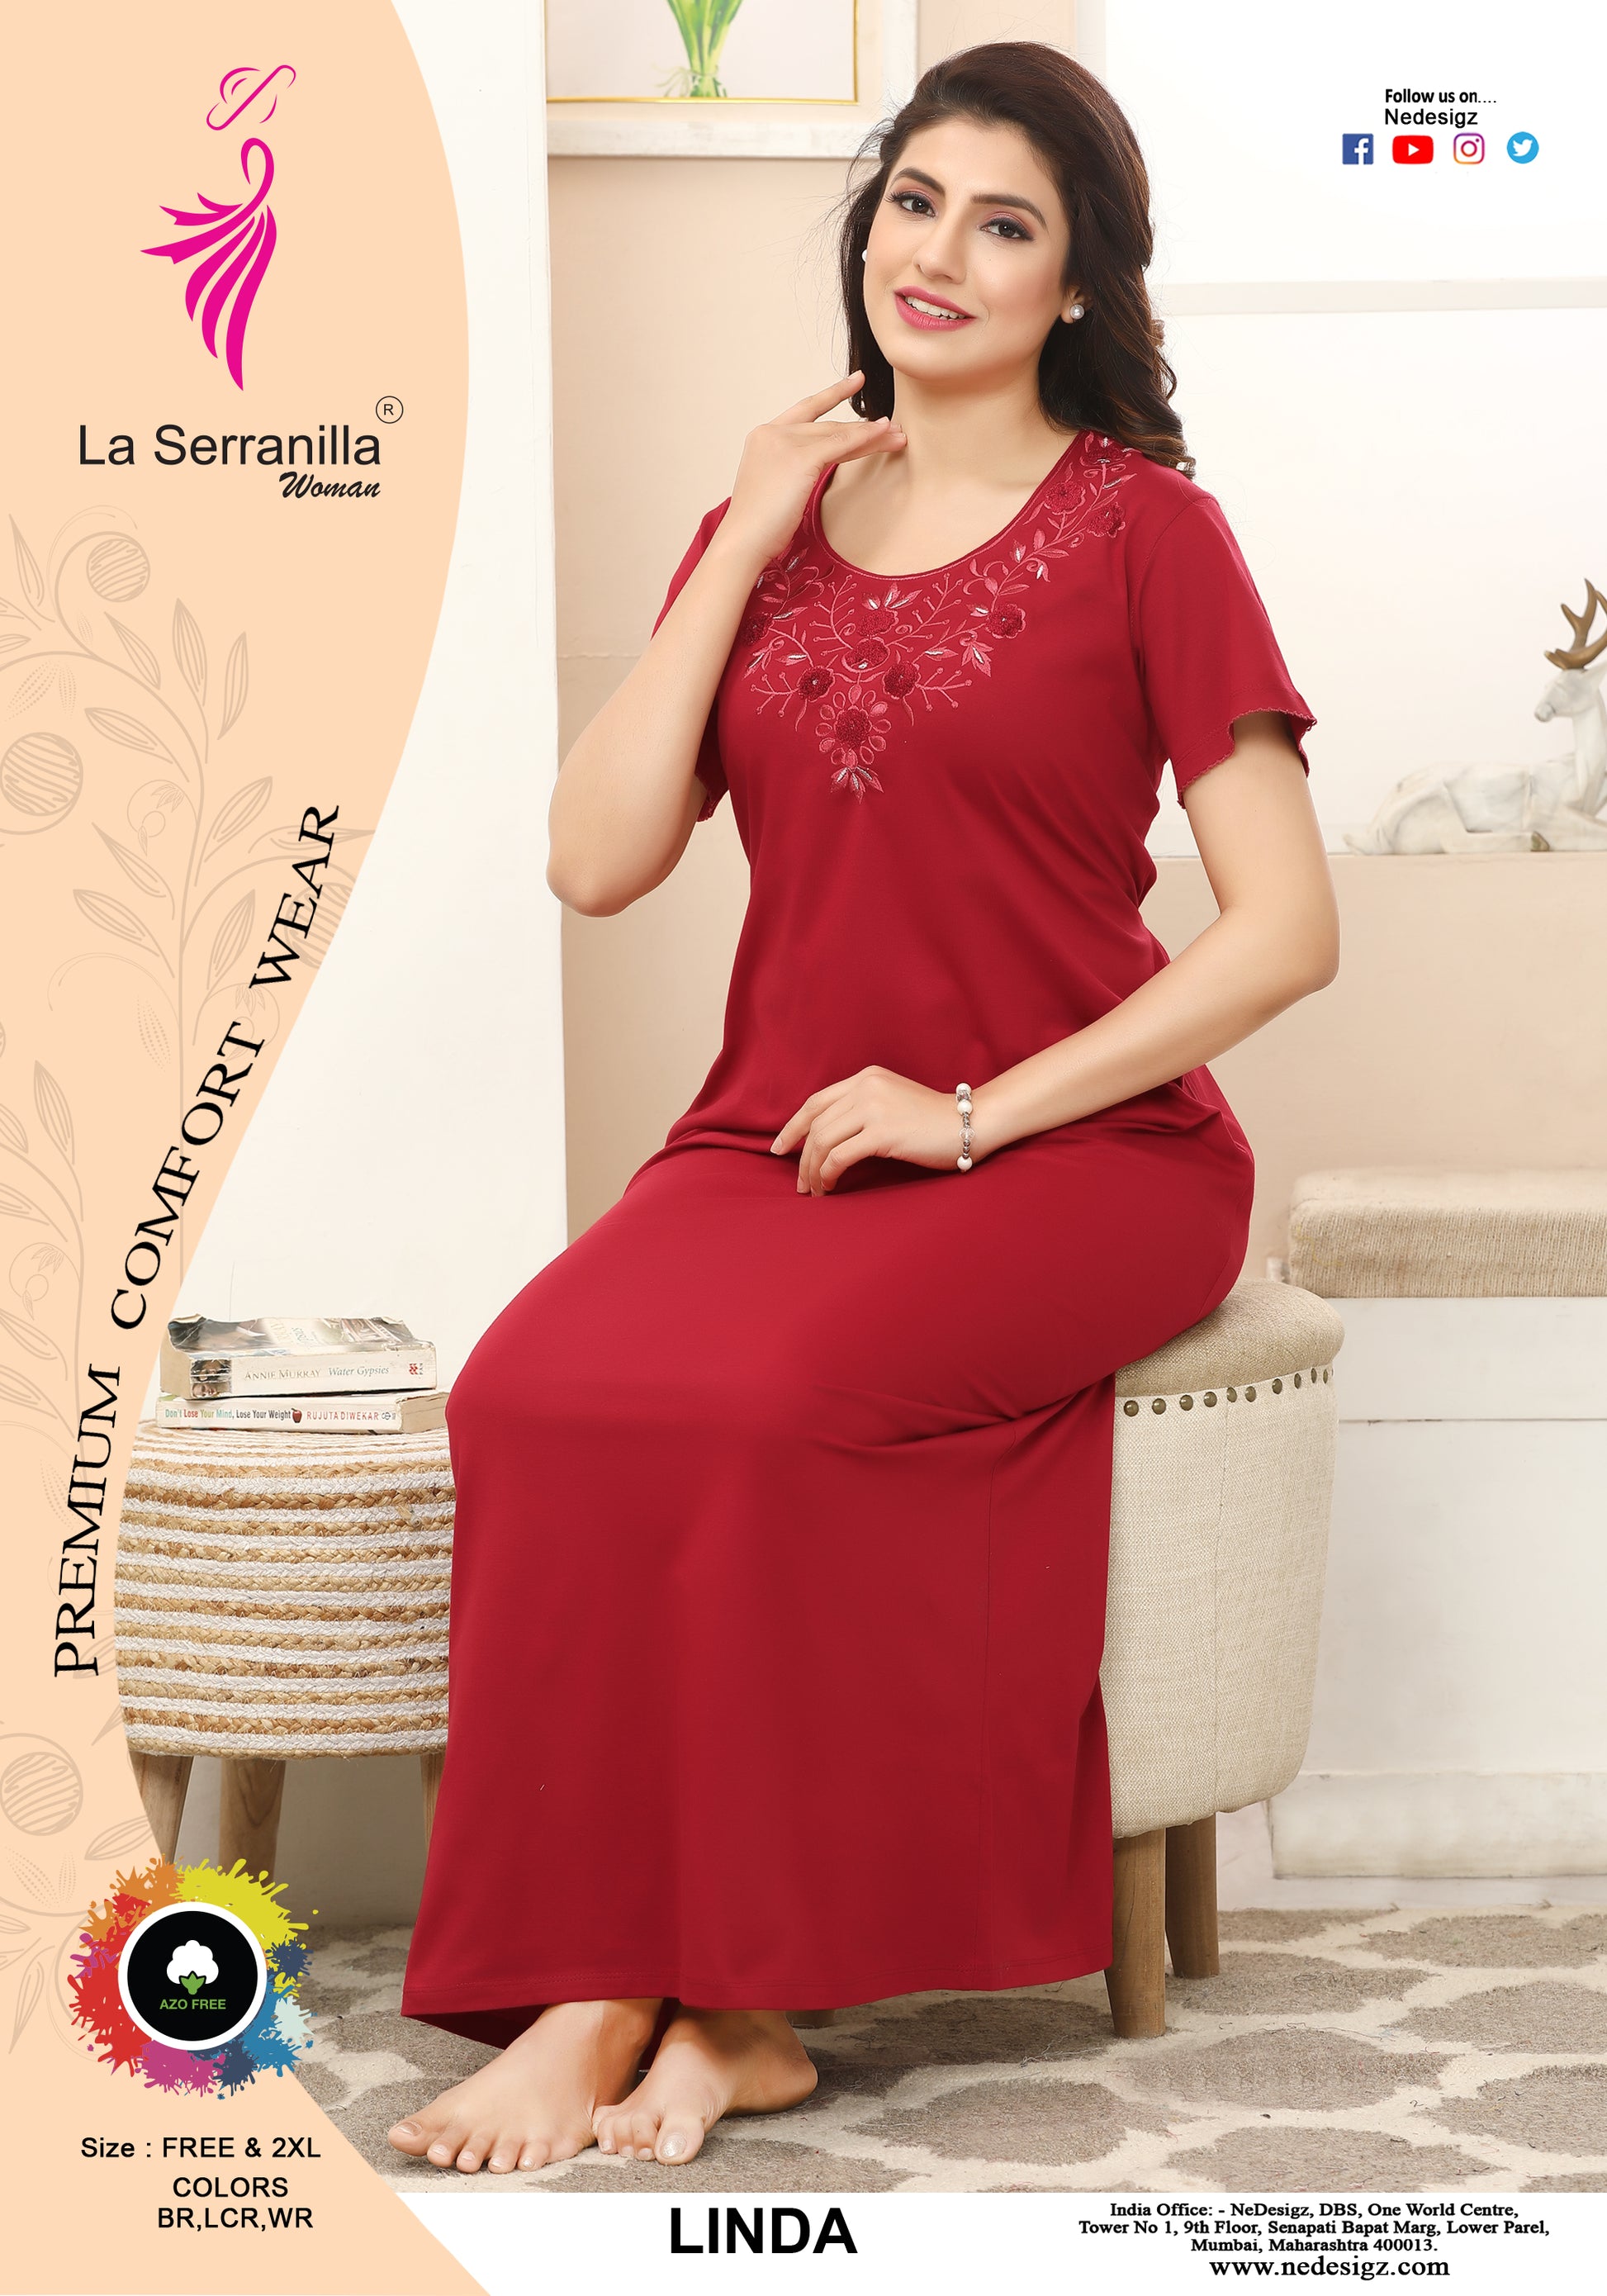 La Serranilla Women's Azo-Free Cotton Hosiery Nighty-NeDesigz.com